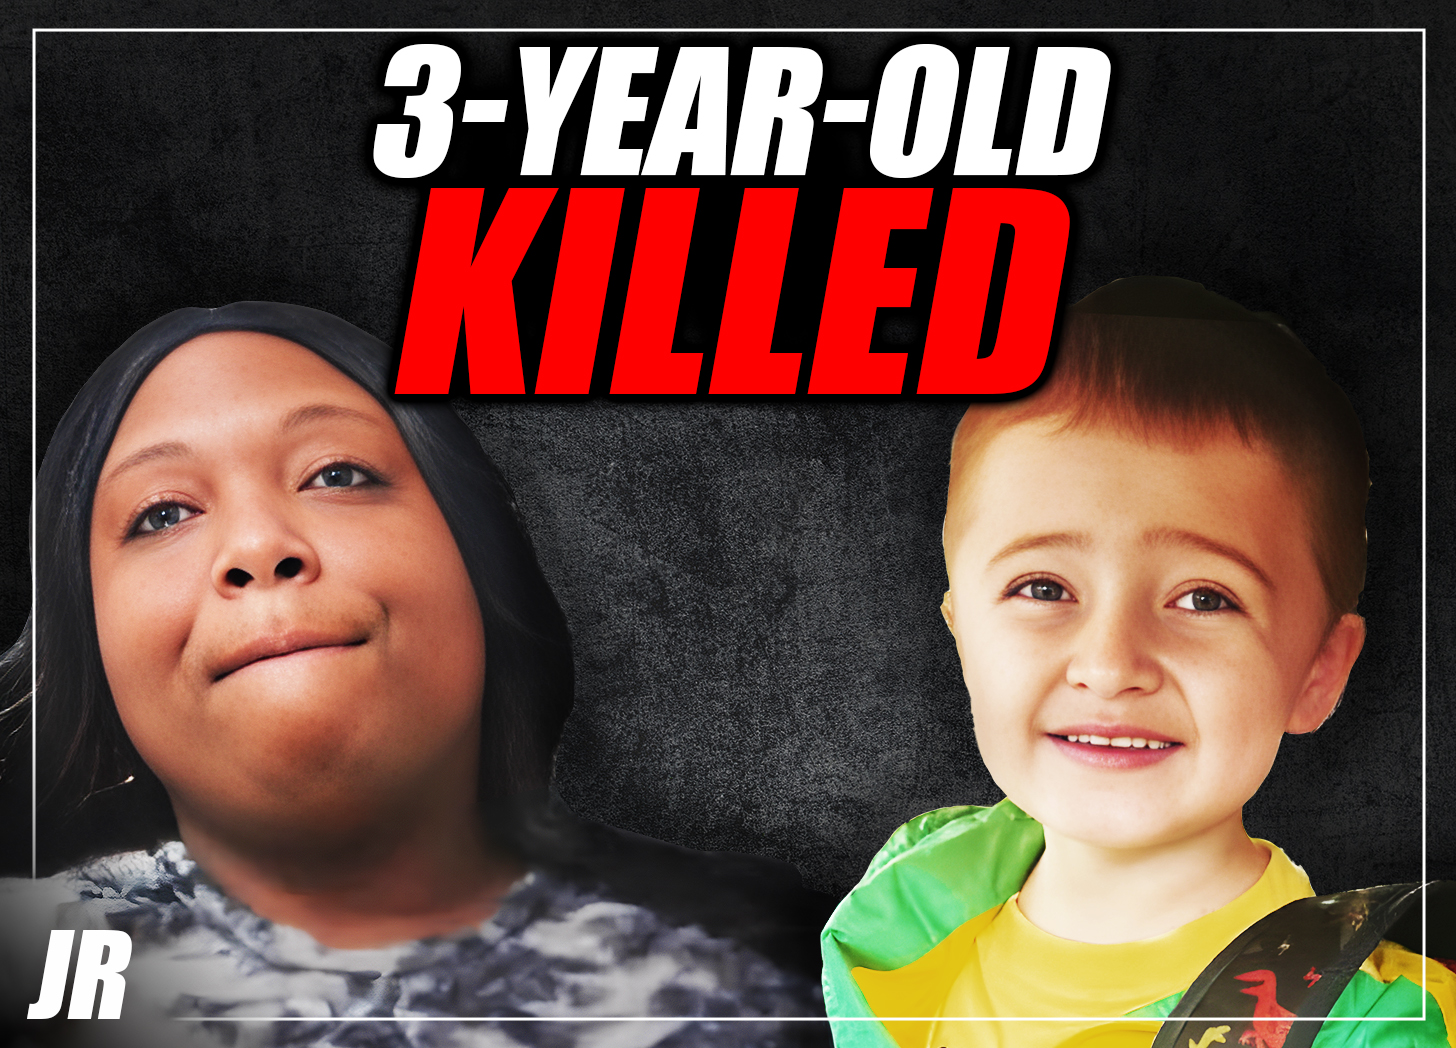 Black woman arrested for ‘random’ knife-murder of 3-year-old boy